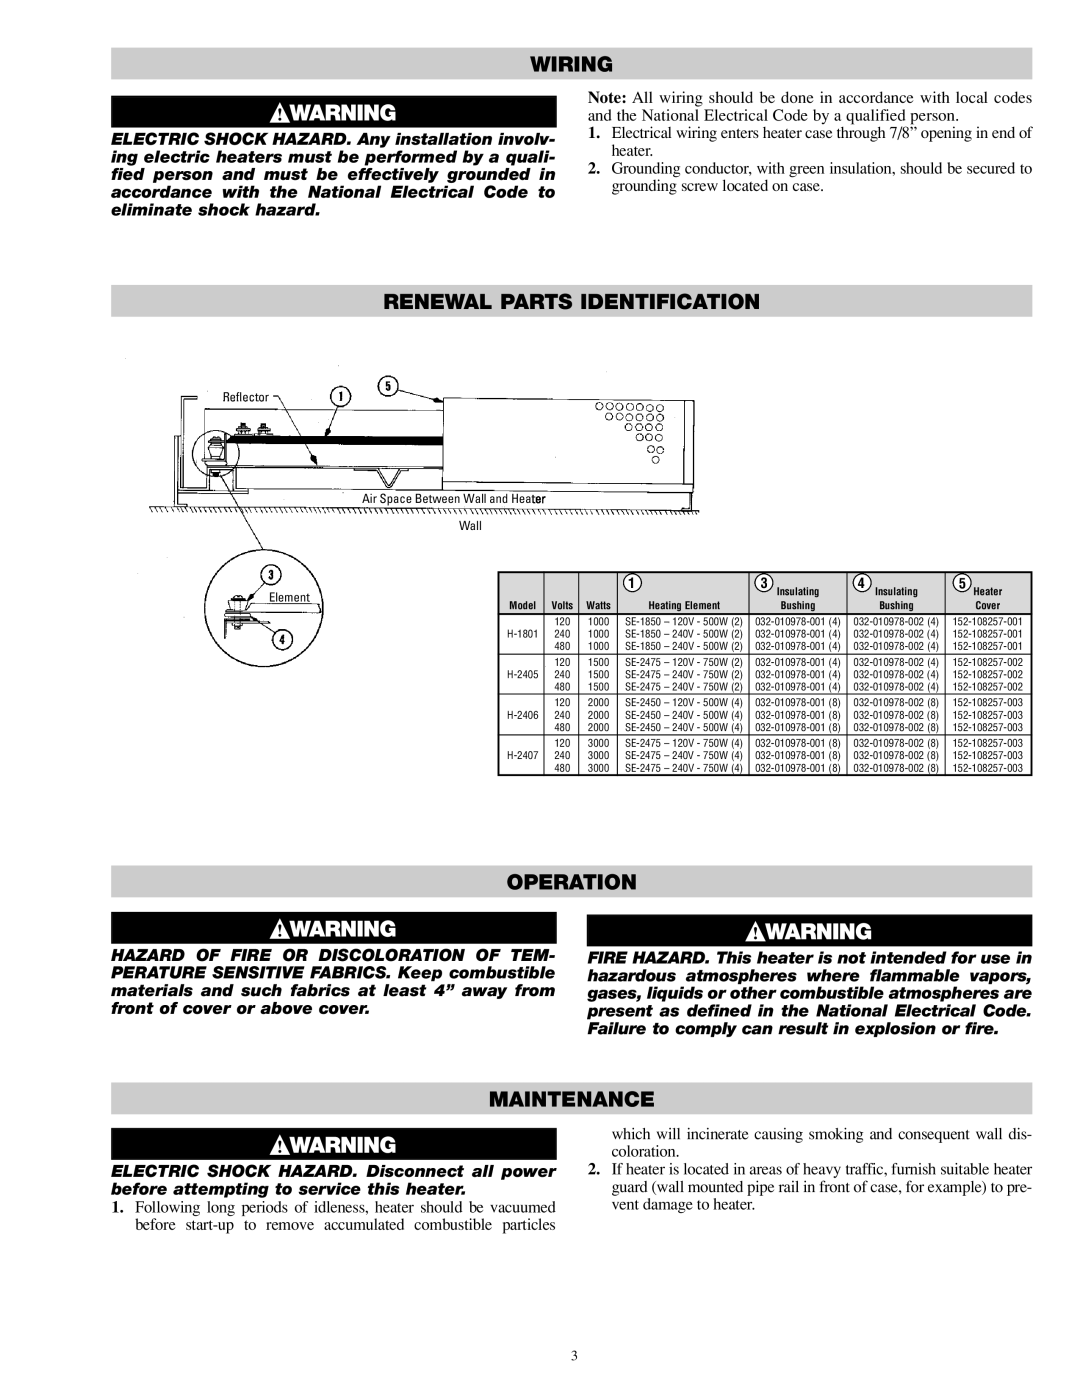 Chromalox PF495-1 specifications Wiring, Renewal Parts Identification, Operation, Maintenance 